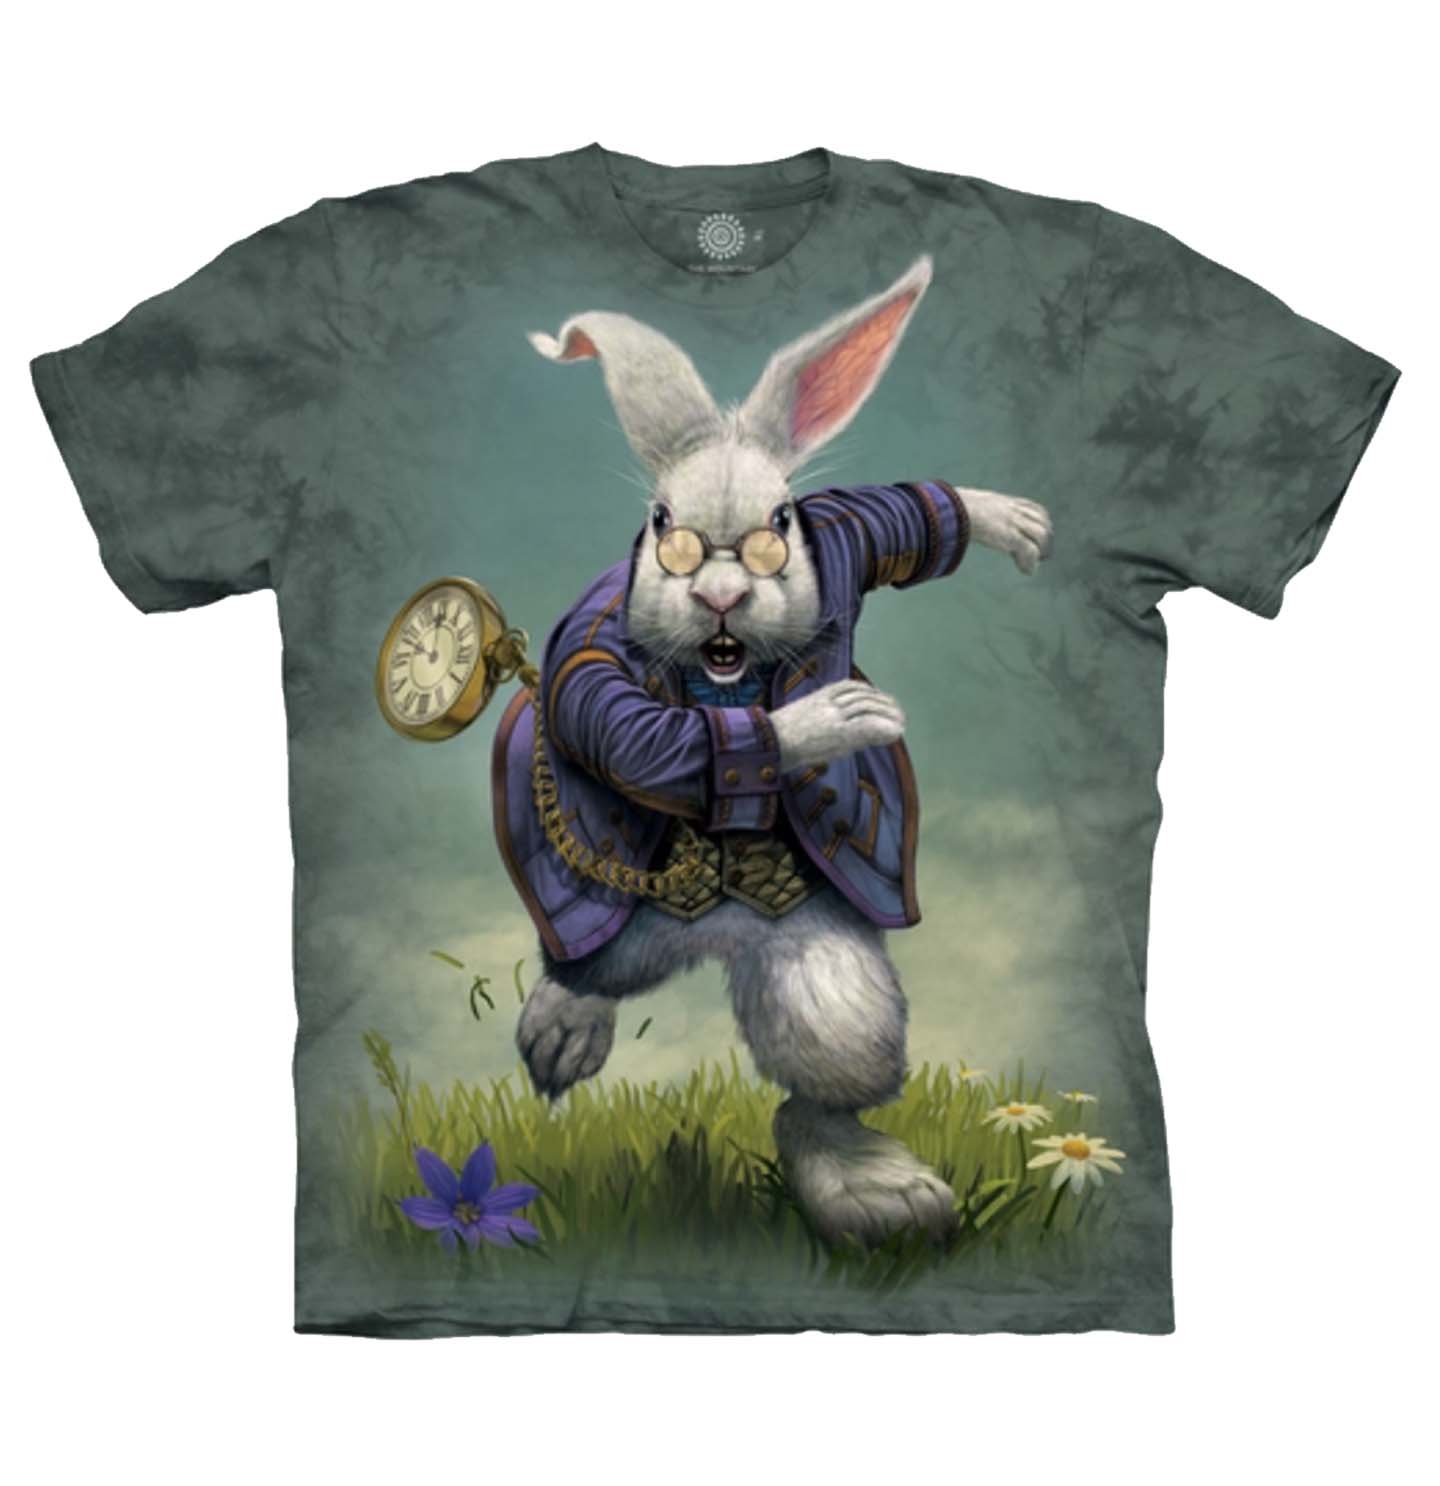 Animal Pride - White Rabbit - Adult Unisex T-Shirt